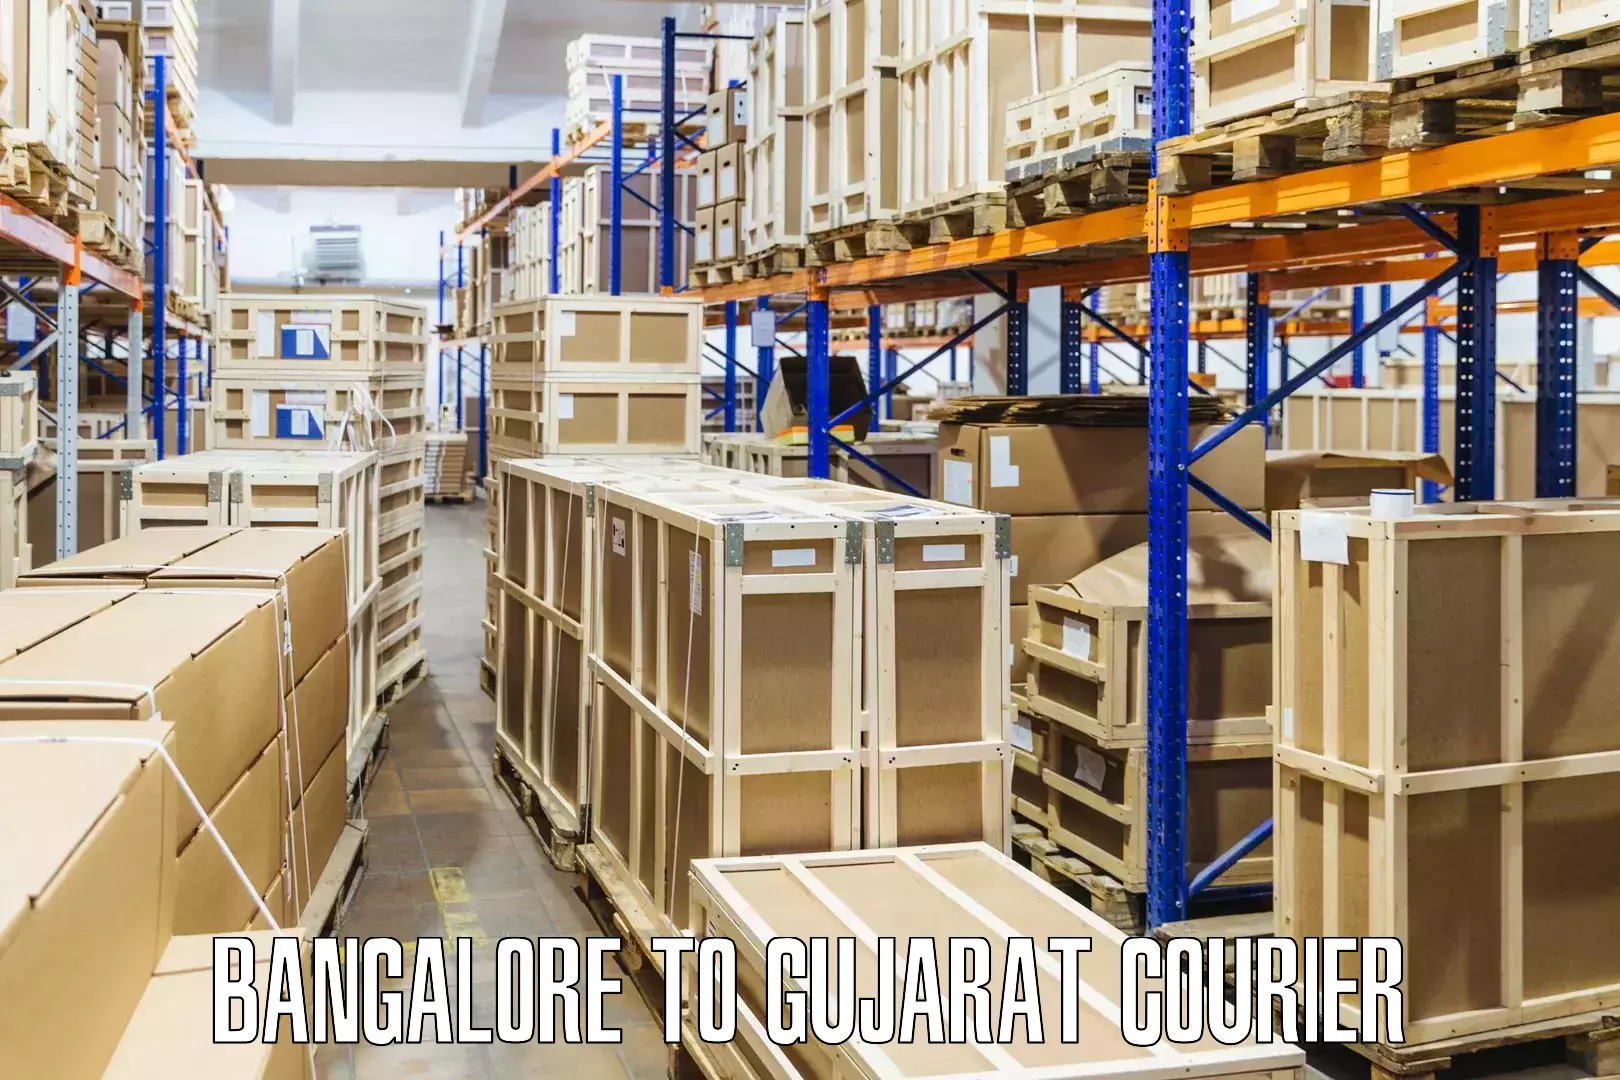 Courier service comparison in Bangalore to Gujarat